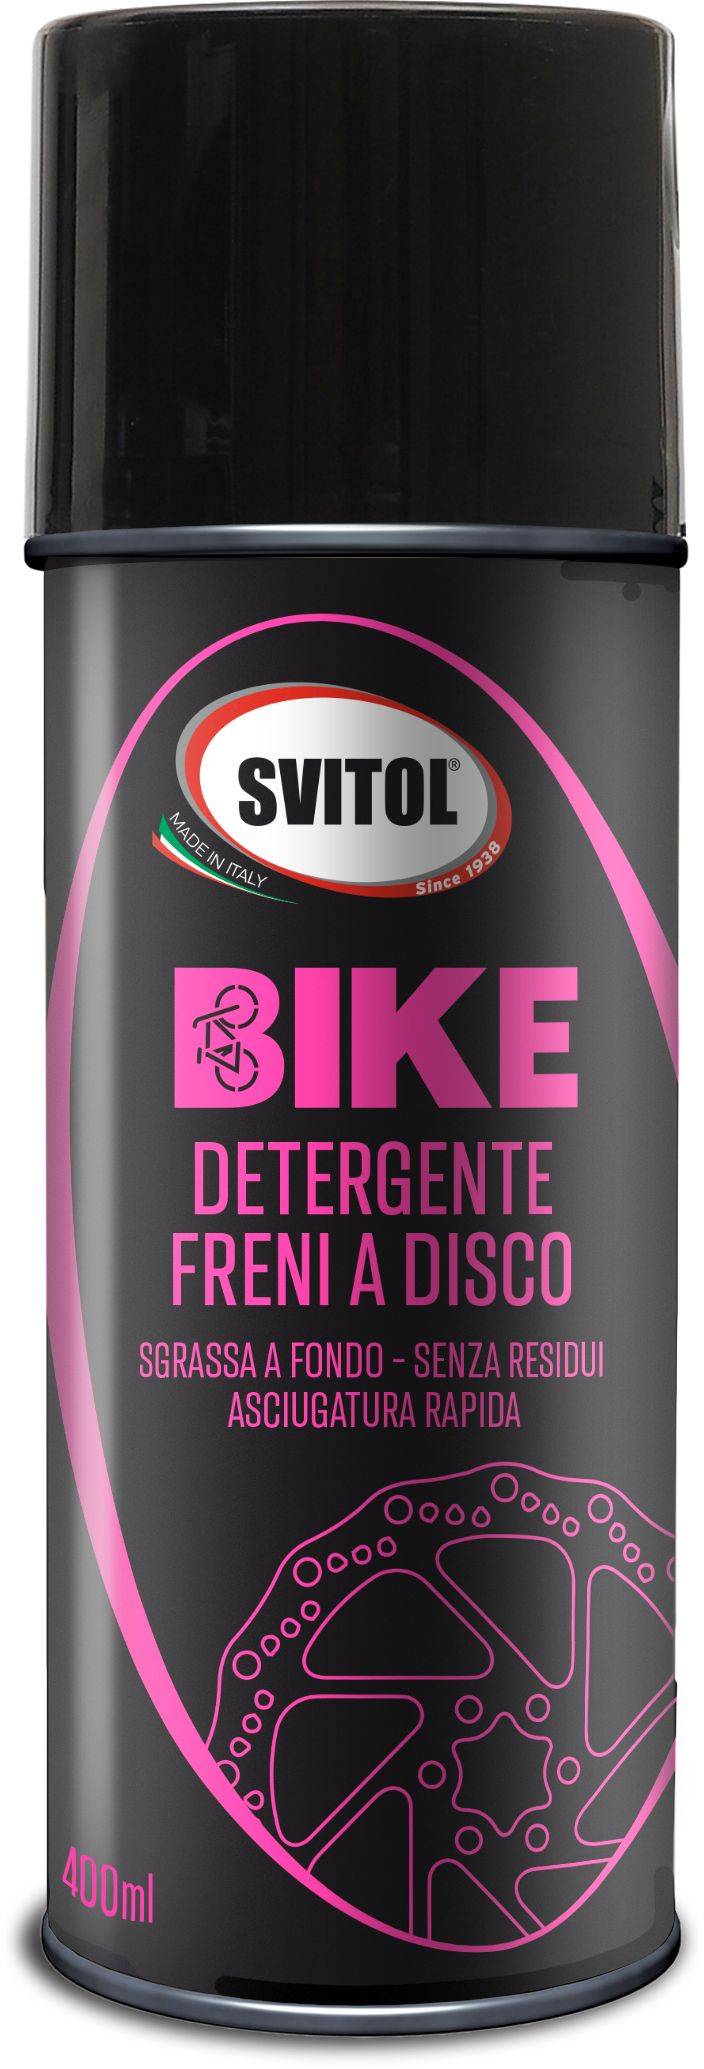 Svitol Bike – Detergente freni a disco 400 ml